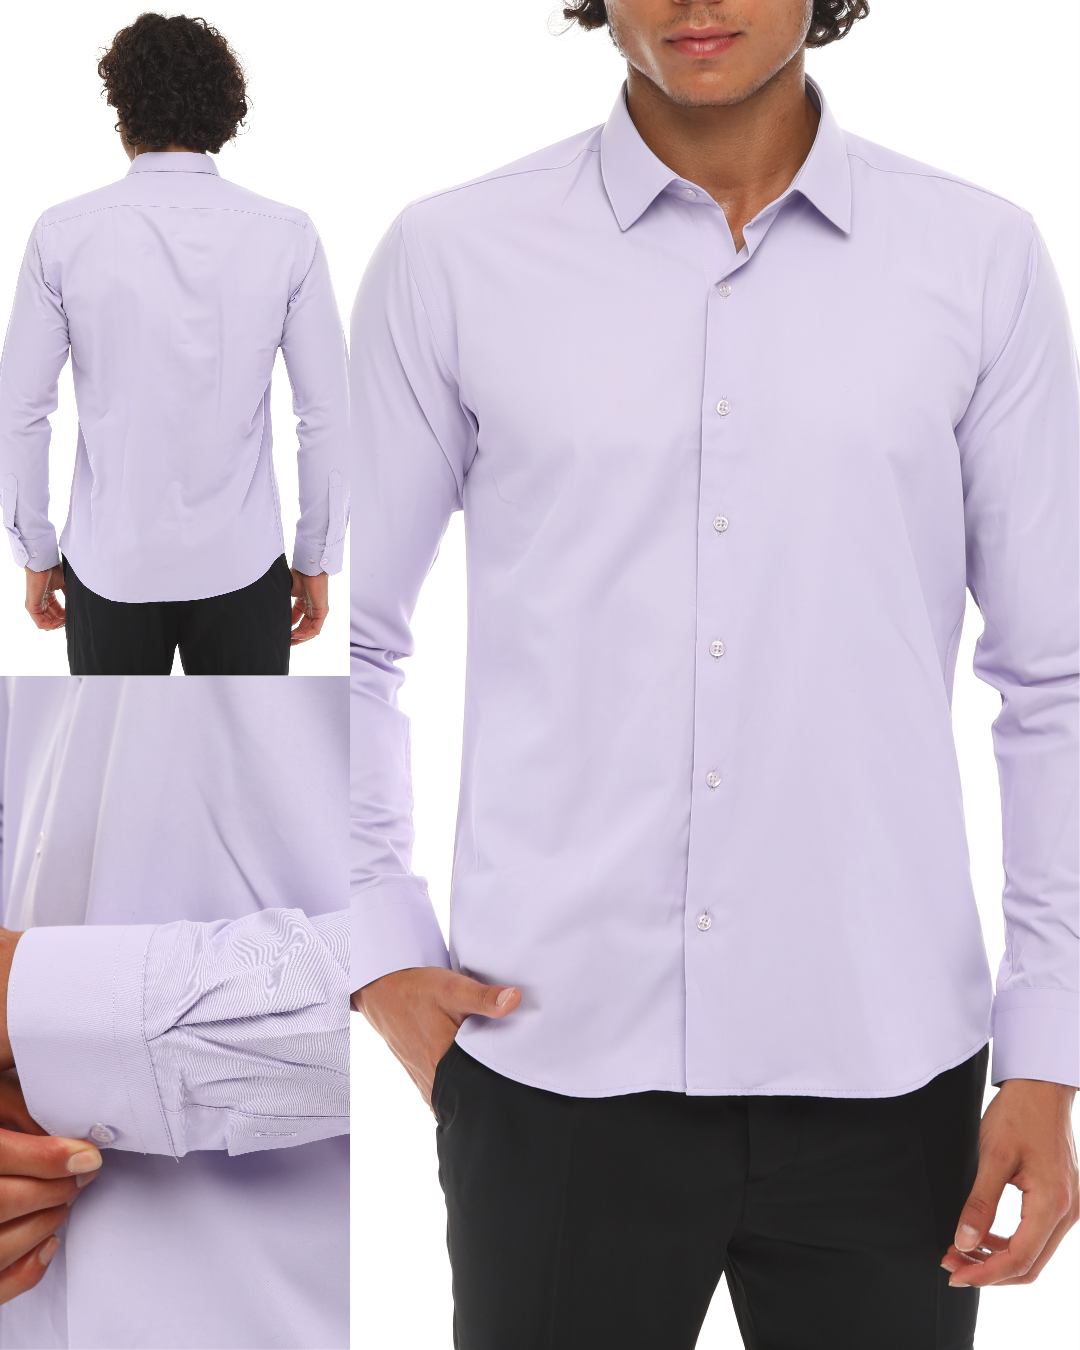 ICONIC LILAC SINGLER - Lilac Single Cuff Shirt